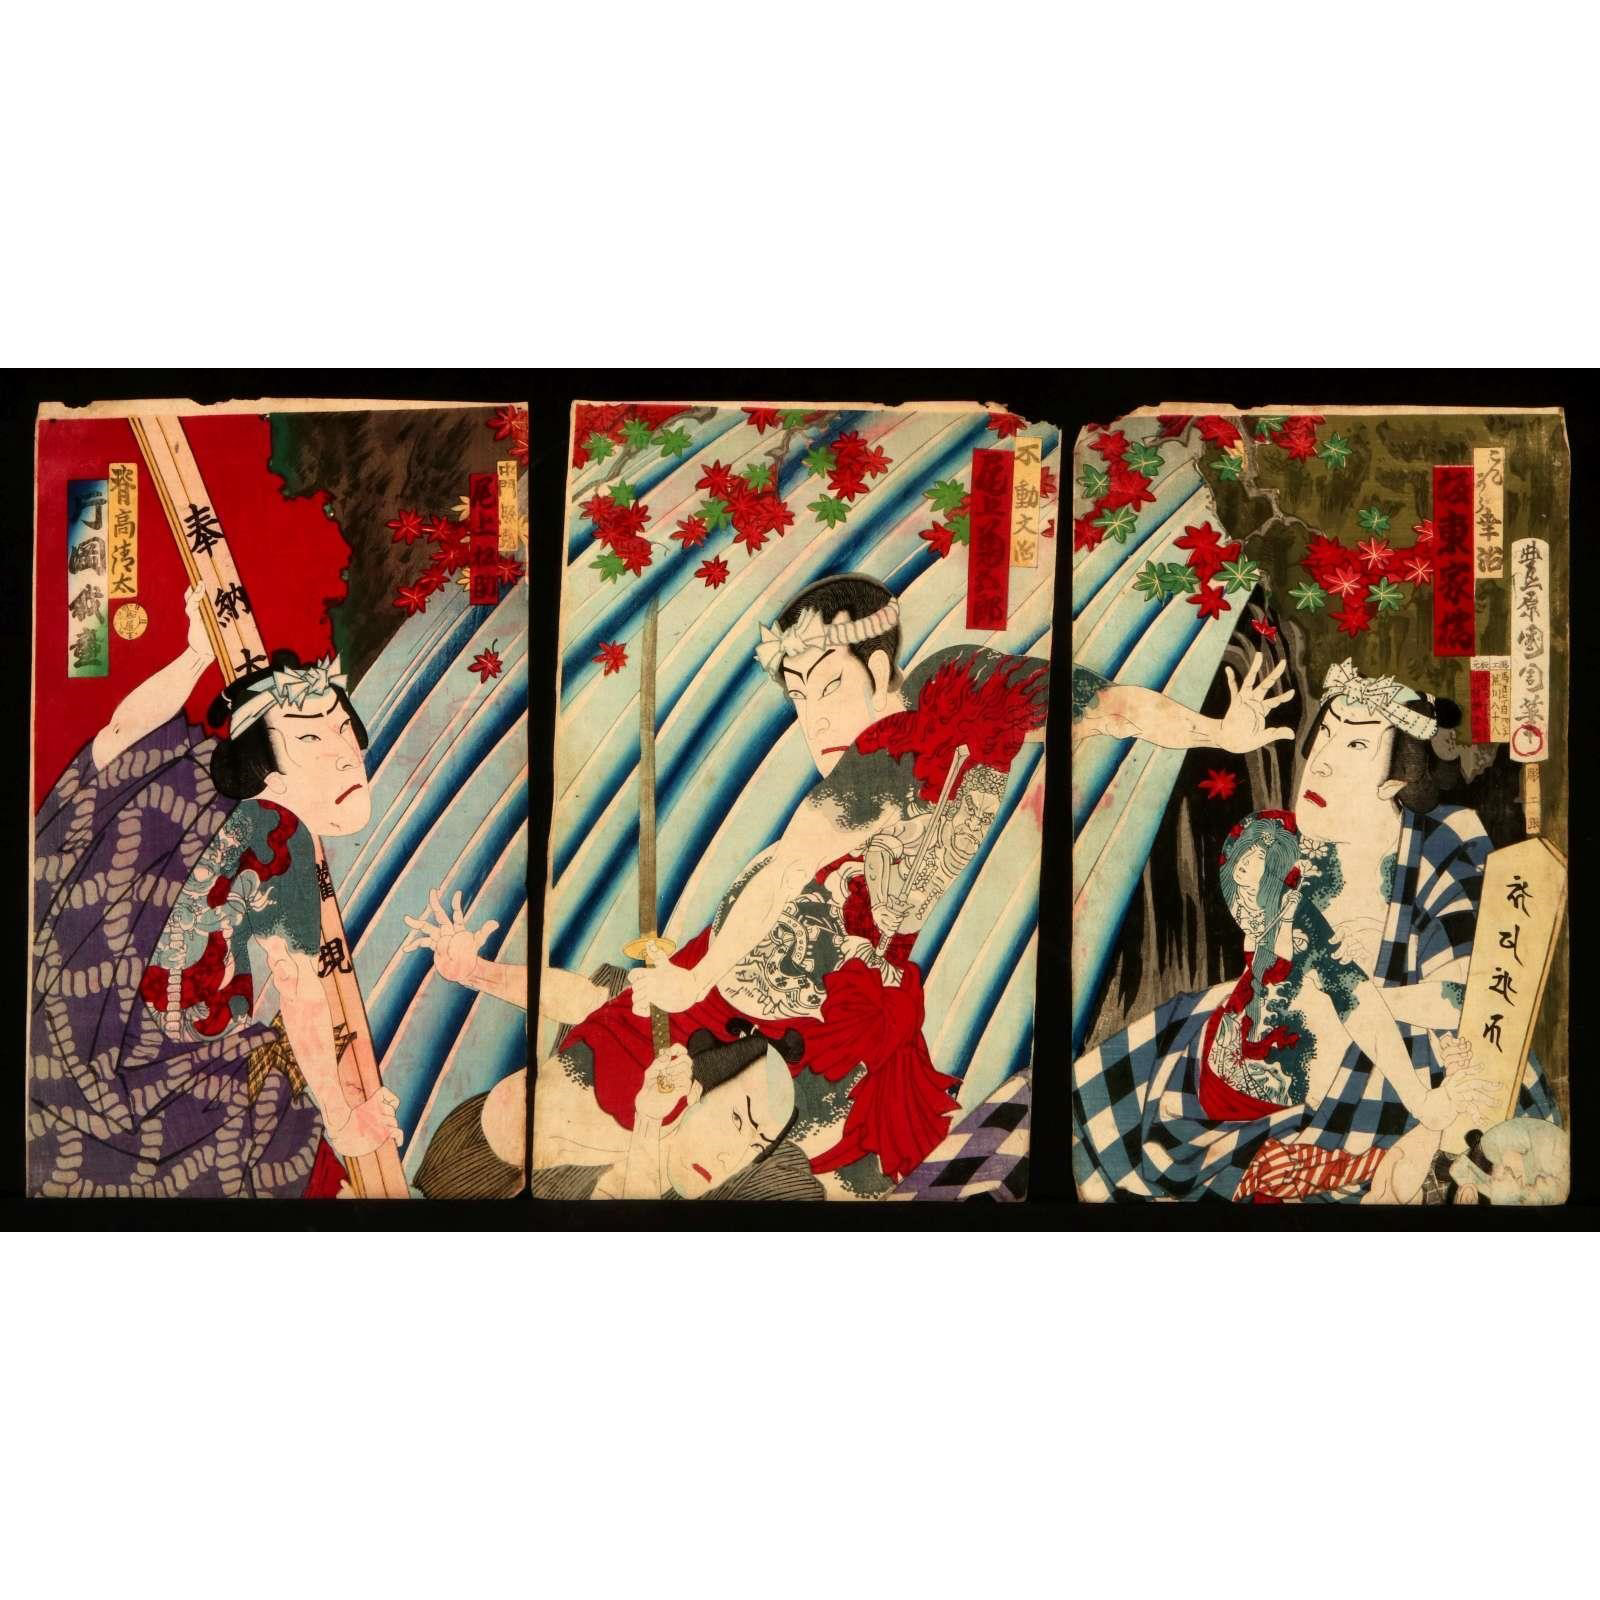 AW10-002: Toyohara Kunichika WOODBLOCK, "THREE ACTORS" TRIPTYCH